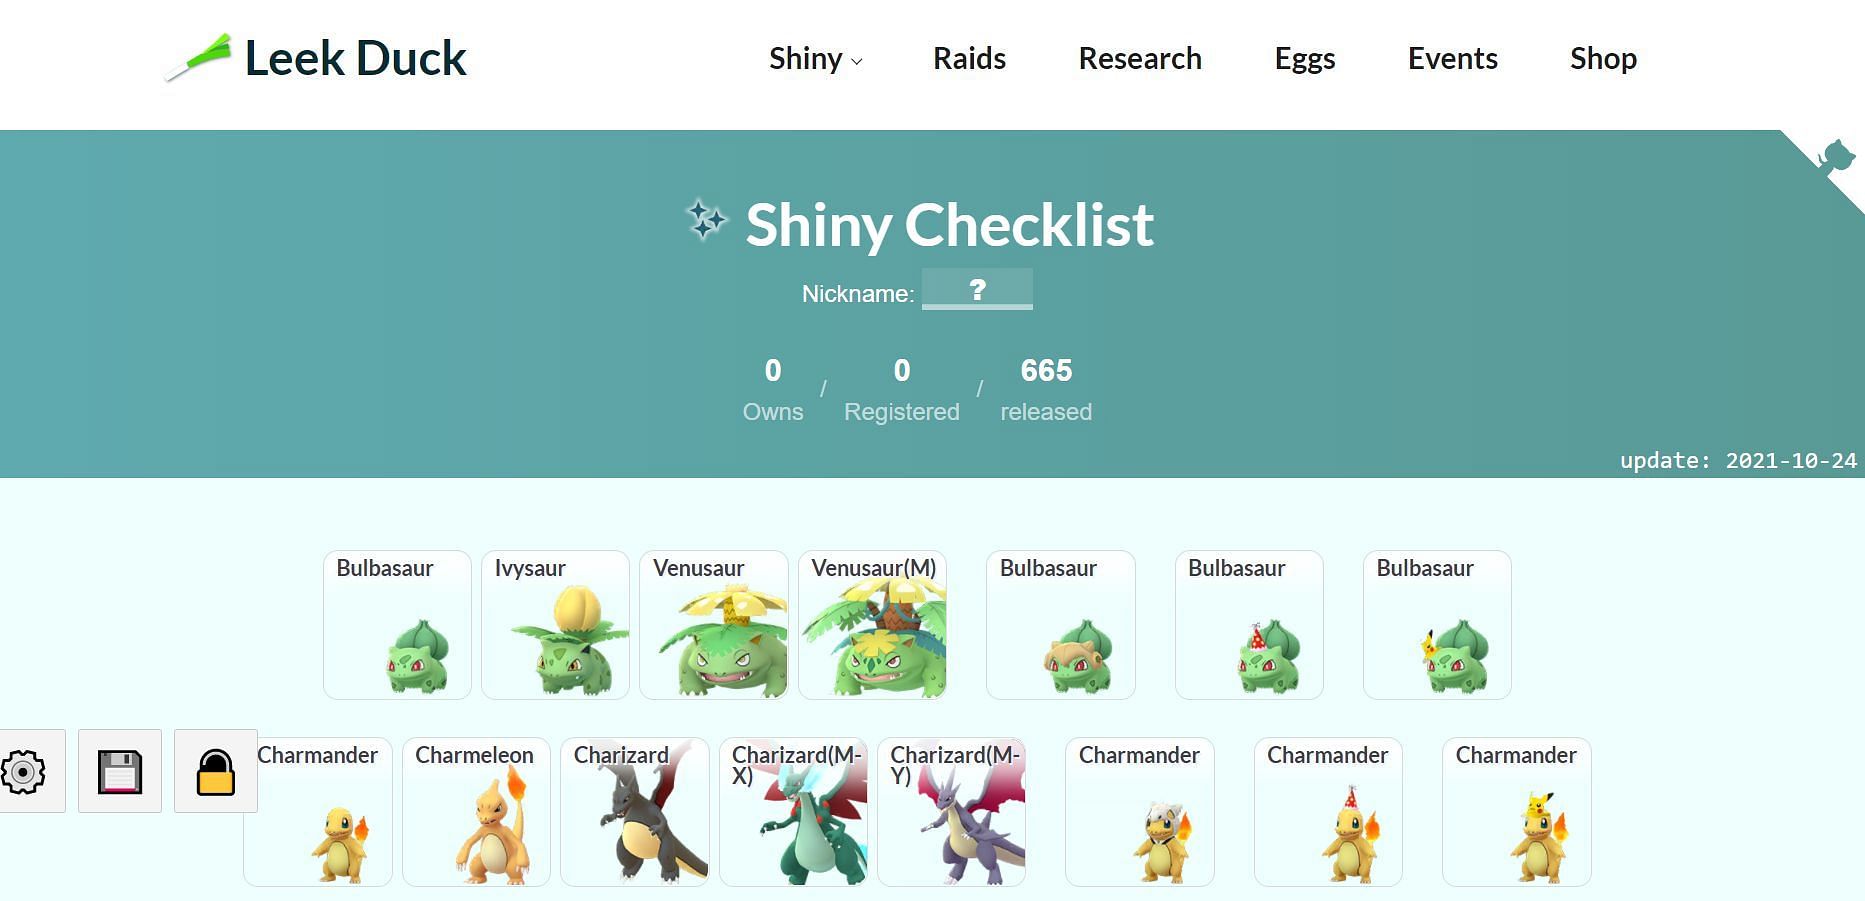 Pokemon Go Shiny List: full shiny checklist and how to catch